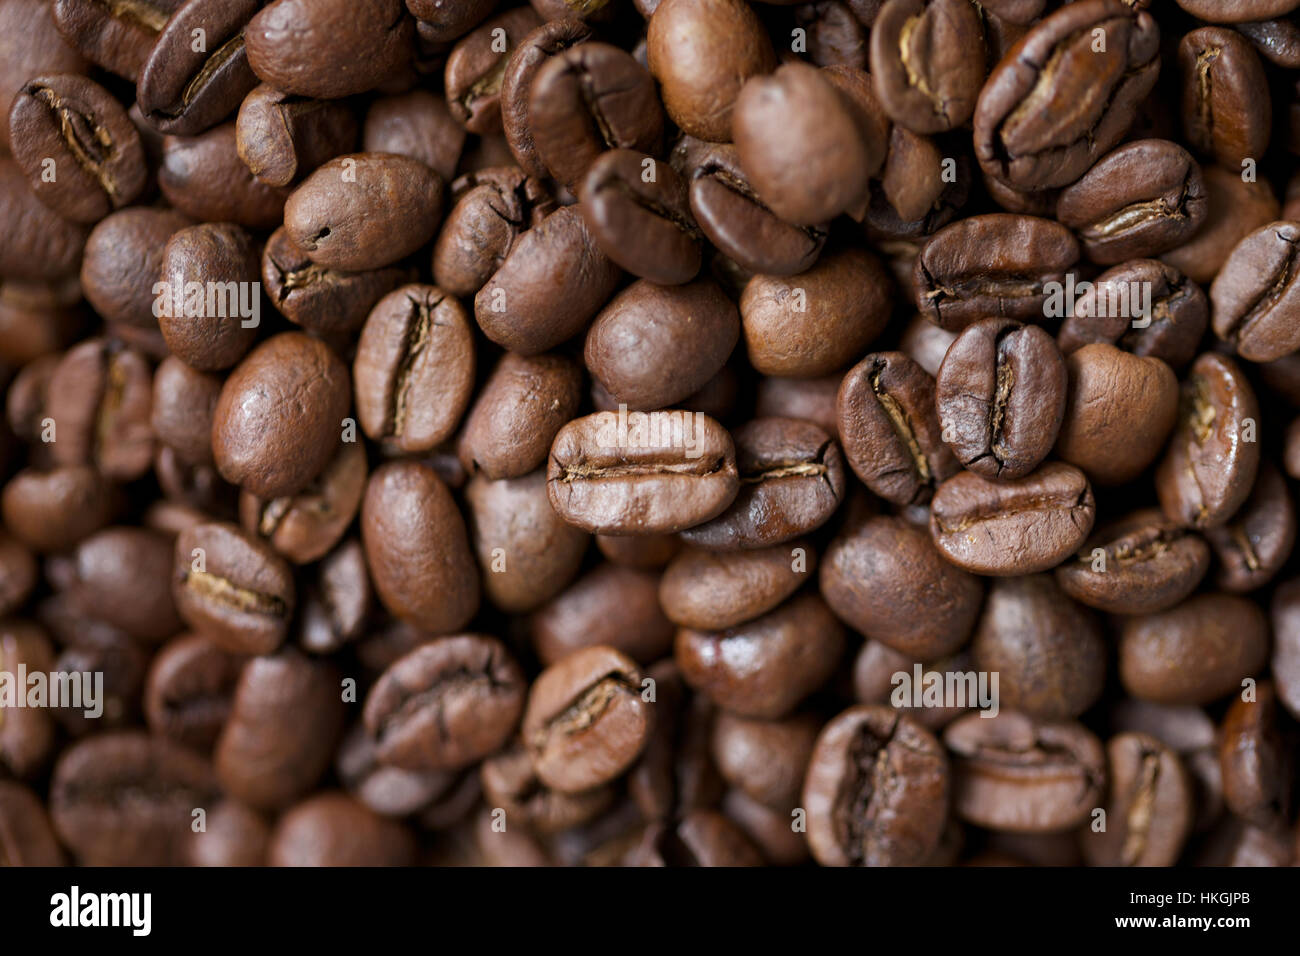 roasted coffee beans in abundance. caffeine, coffee seed, food, beans. Stock Photo